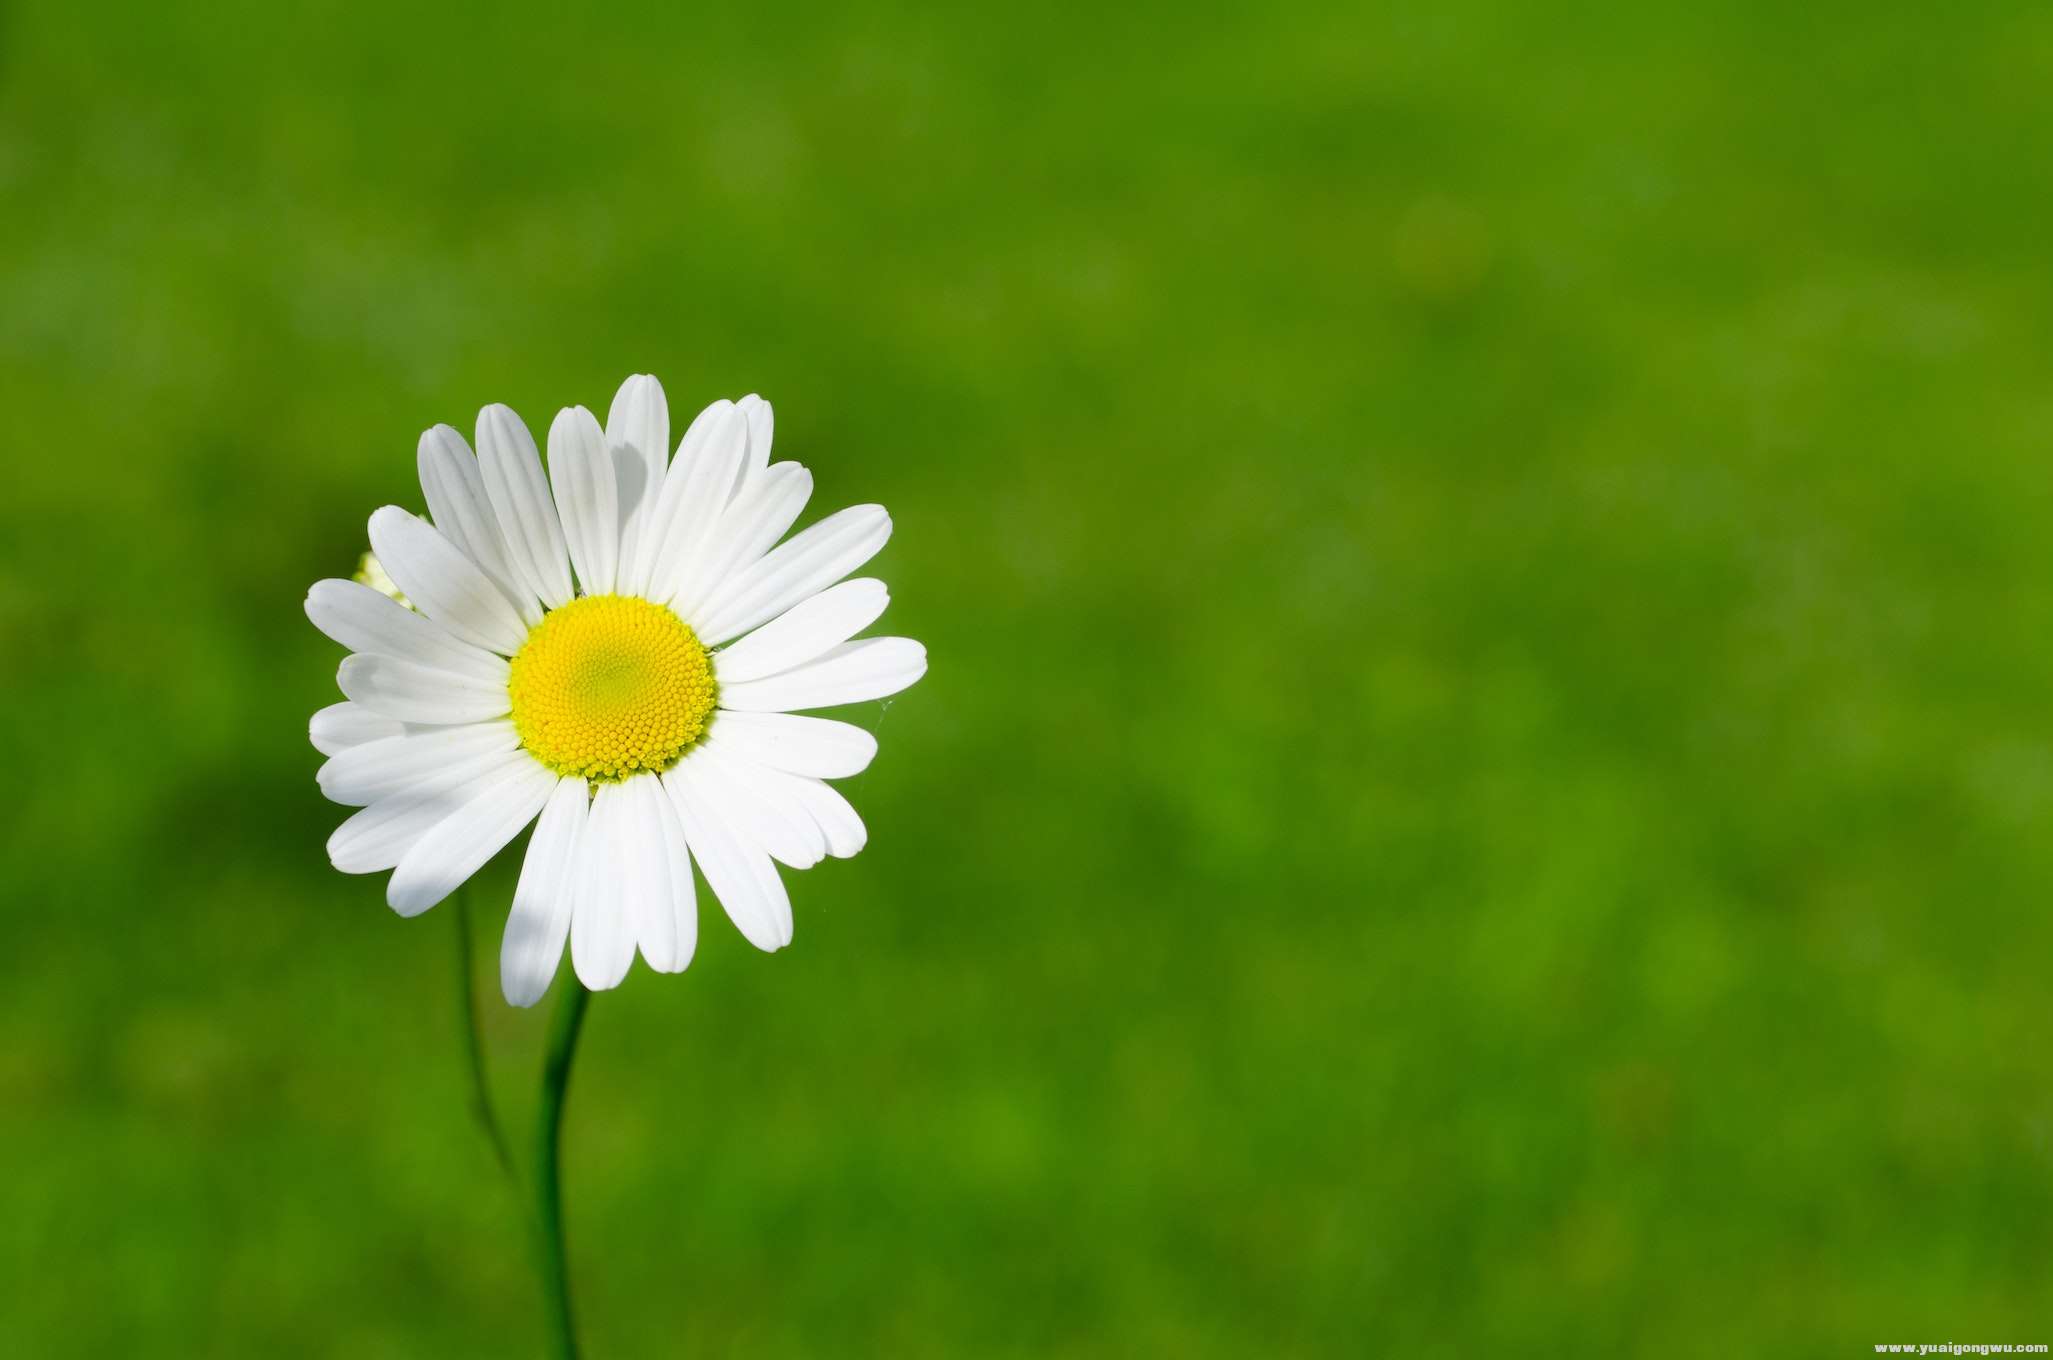 white-daisy-closeup-photography-597055.jpg